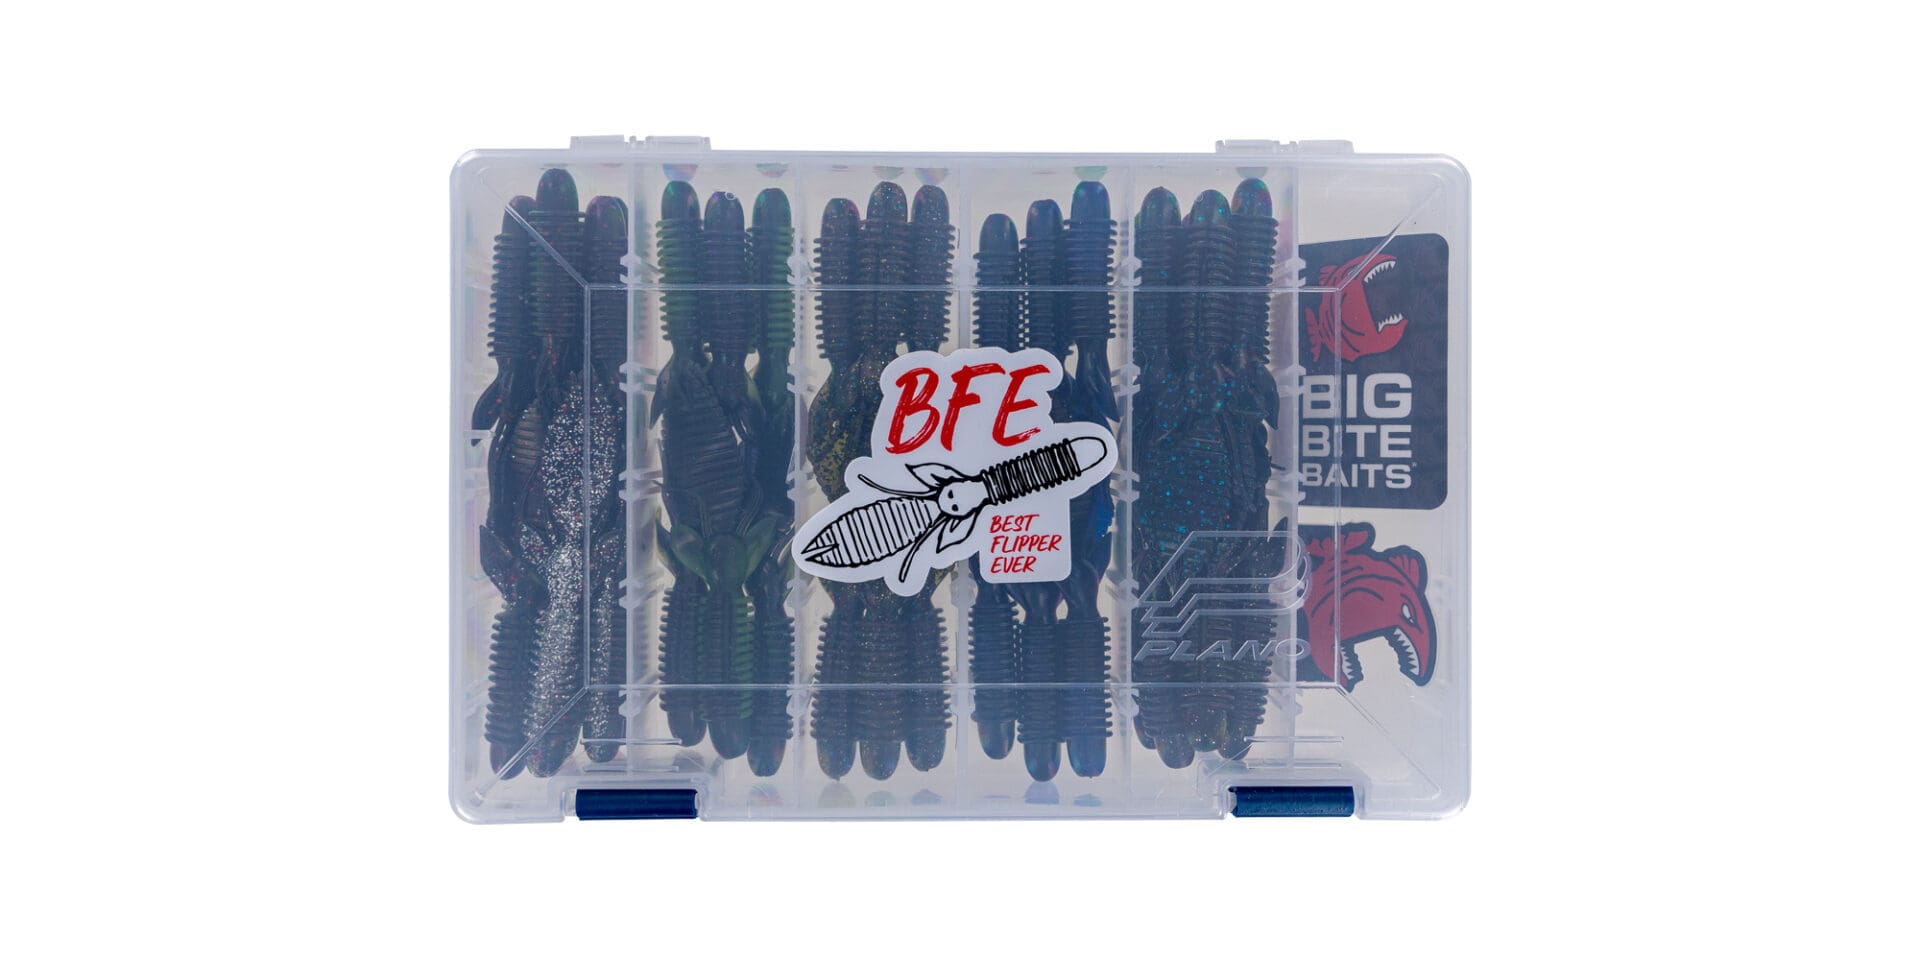  Big Bite Baits 4.5 BFE/Bedlam (6 Pack) : Sports